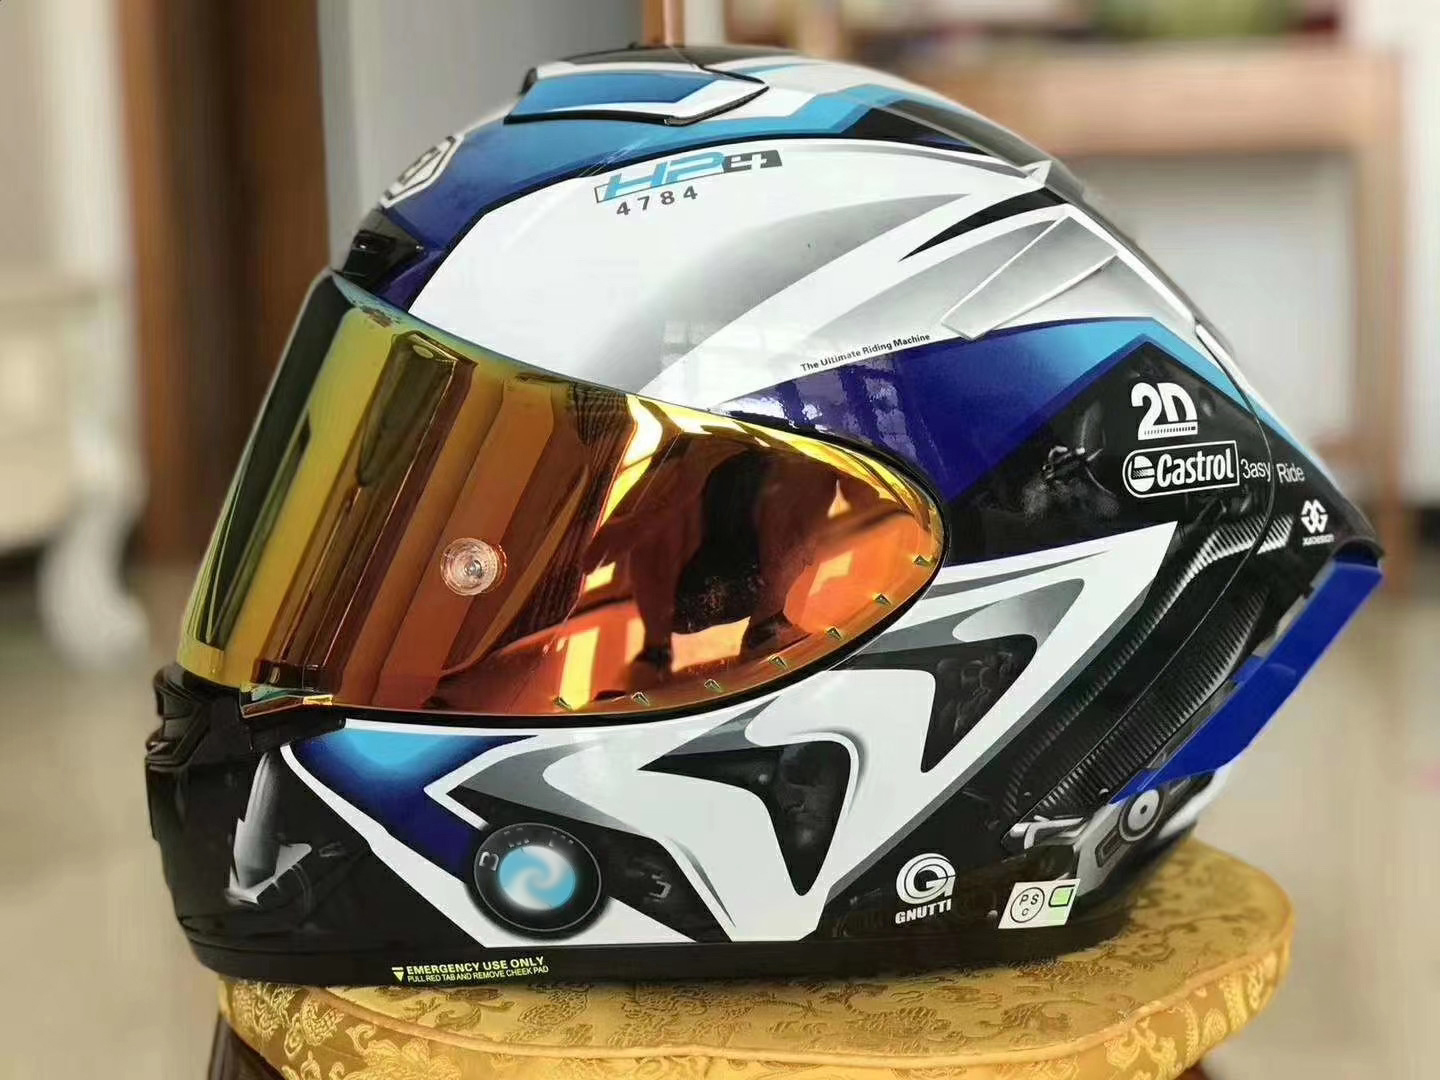 Full Face Motorcycle helmet X14 blue COLOR Helmet Riding Motocross Racing Motobike Helmet